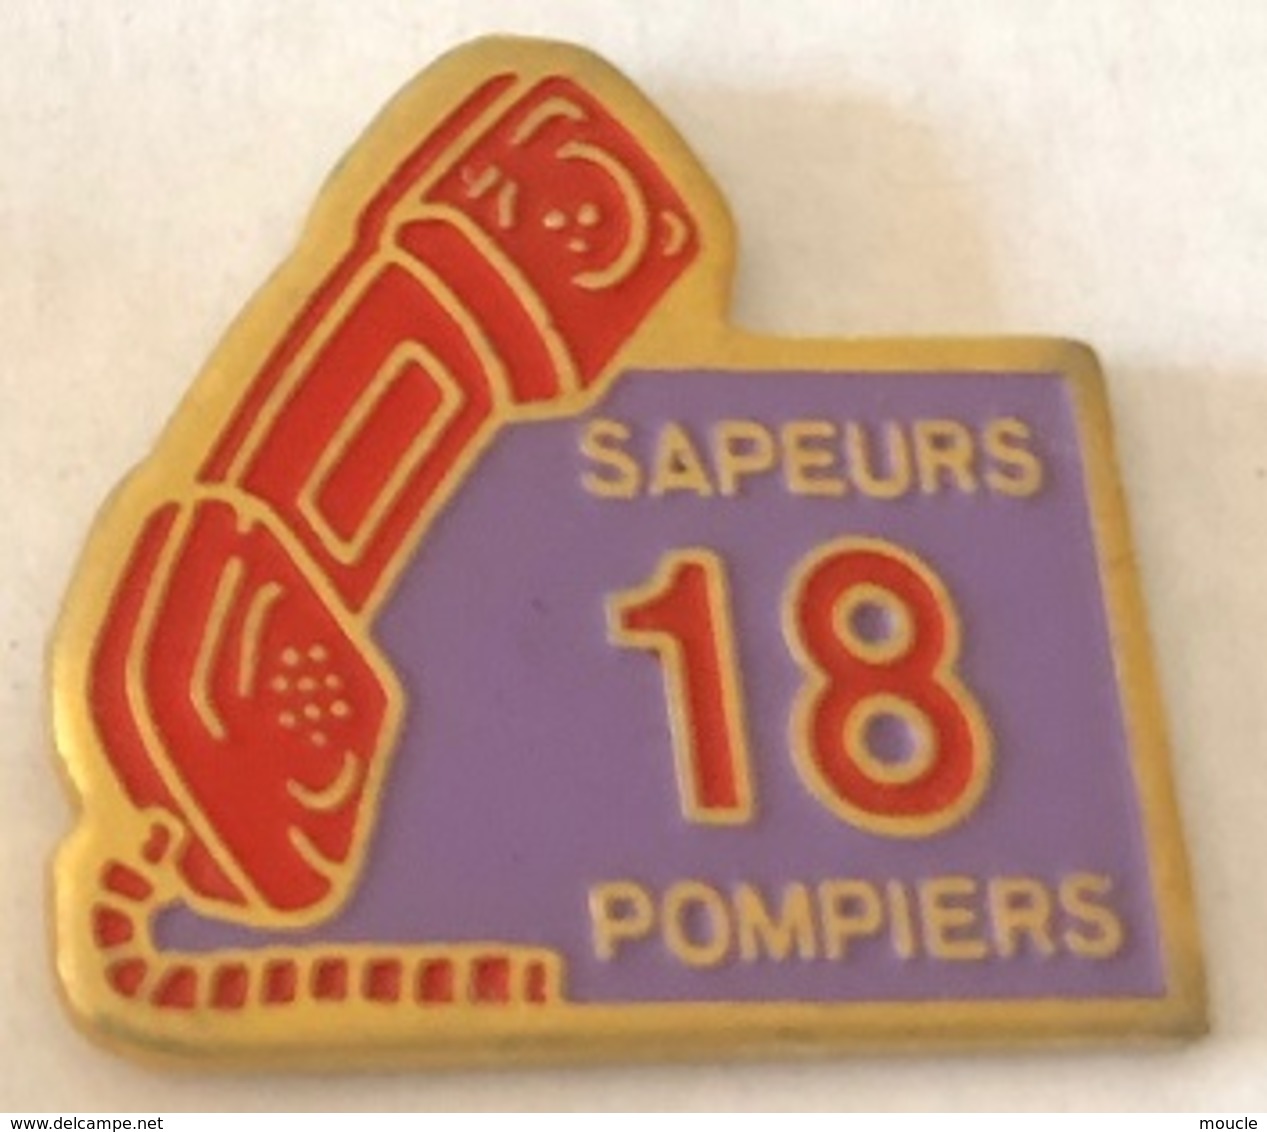 SAPEURS POMPIERS -18 - TELEPHONE - FRANCE - TELEFONO POMPIERE - PHONE FIREFIGHTER - TELEFON  FEUERWEHRMANN - (25) - Firemen